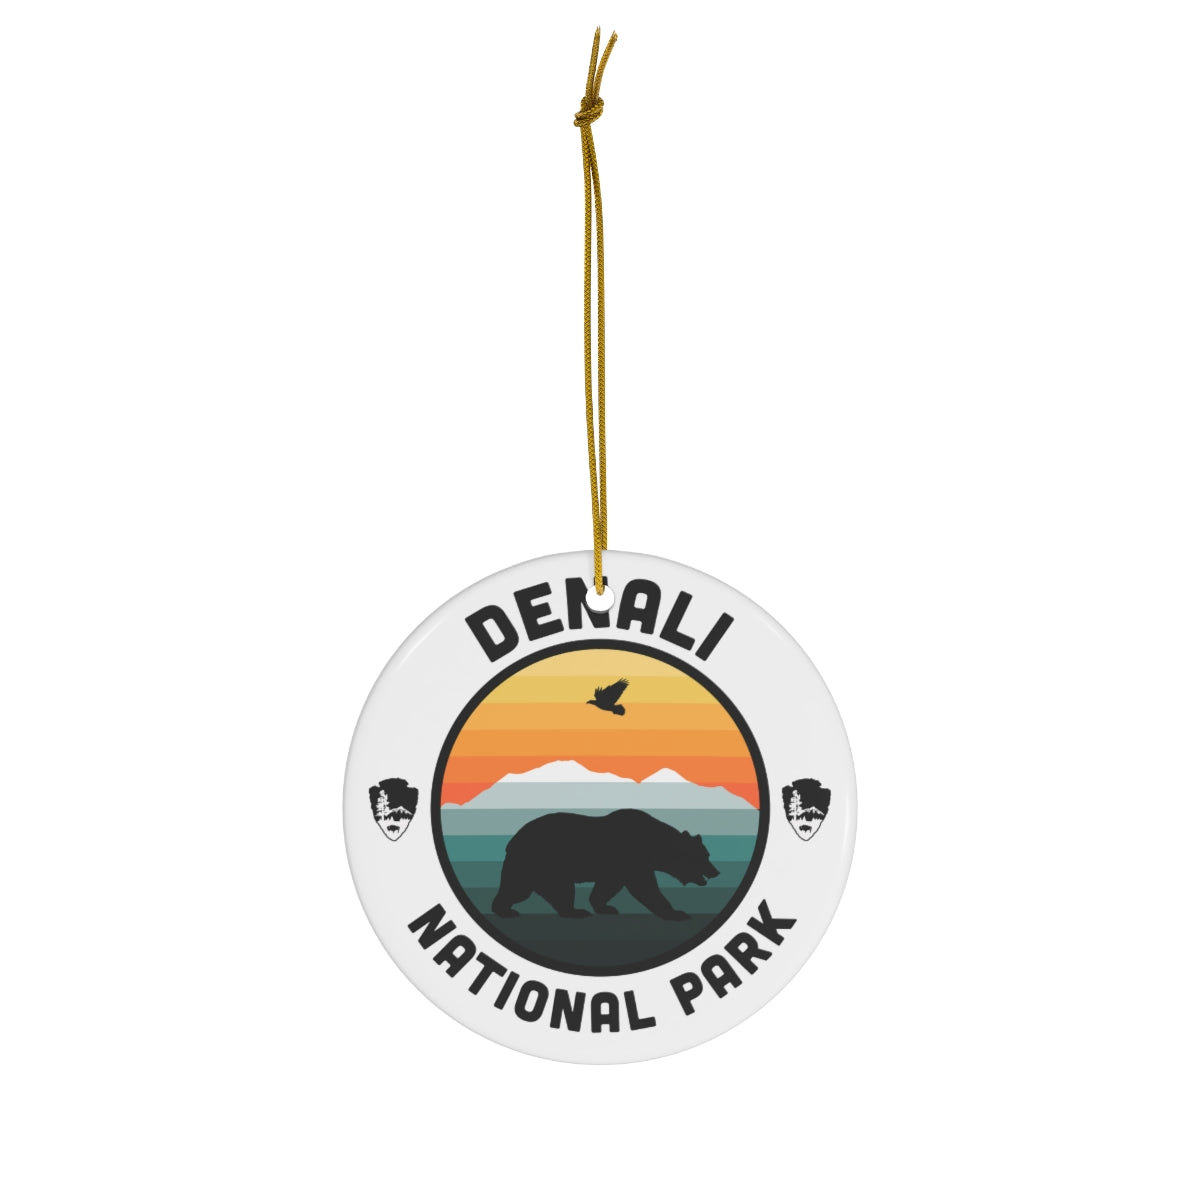 Denali National Park Ornament - Round Emblem Design